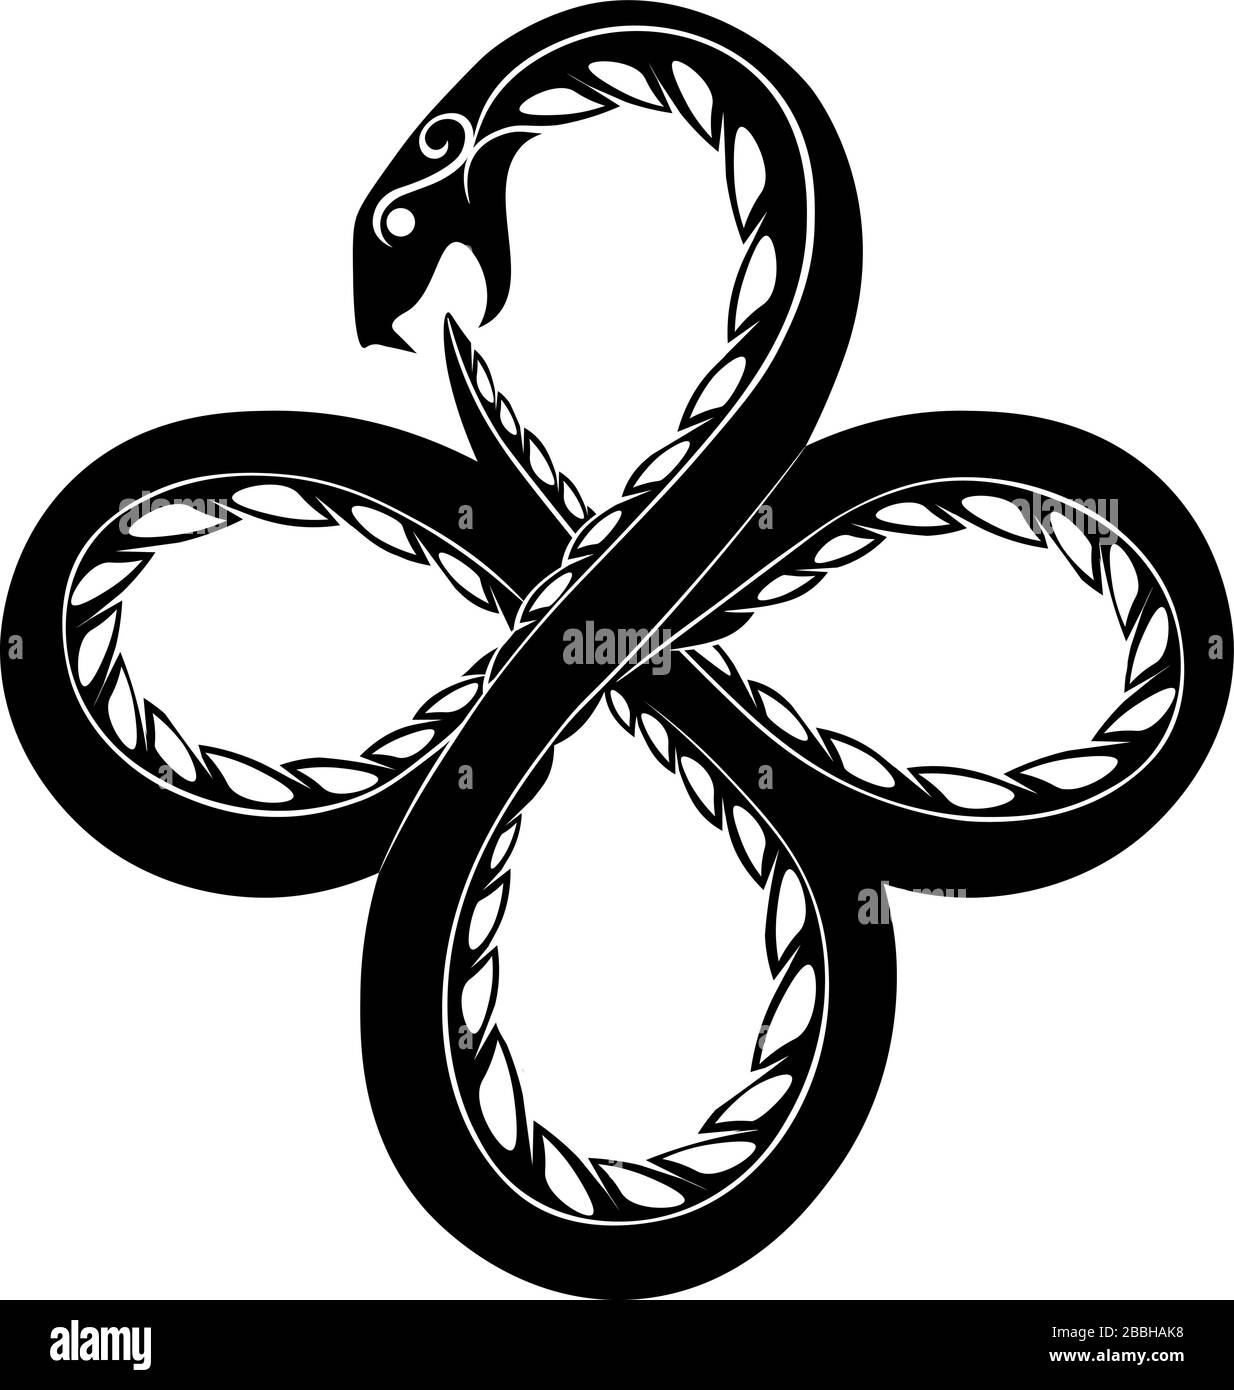 Schwarzes Tatoo oder Druck-Illustration des okkulten Symbols ouroboros Schlange Stock Vektor